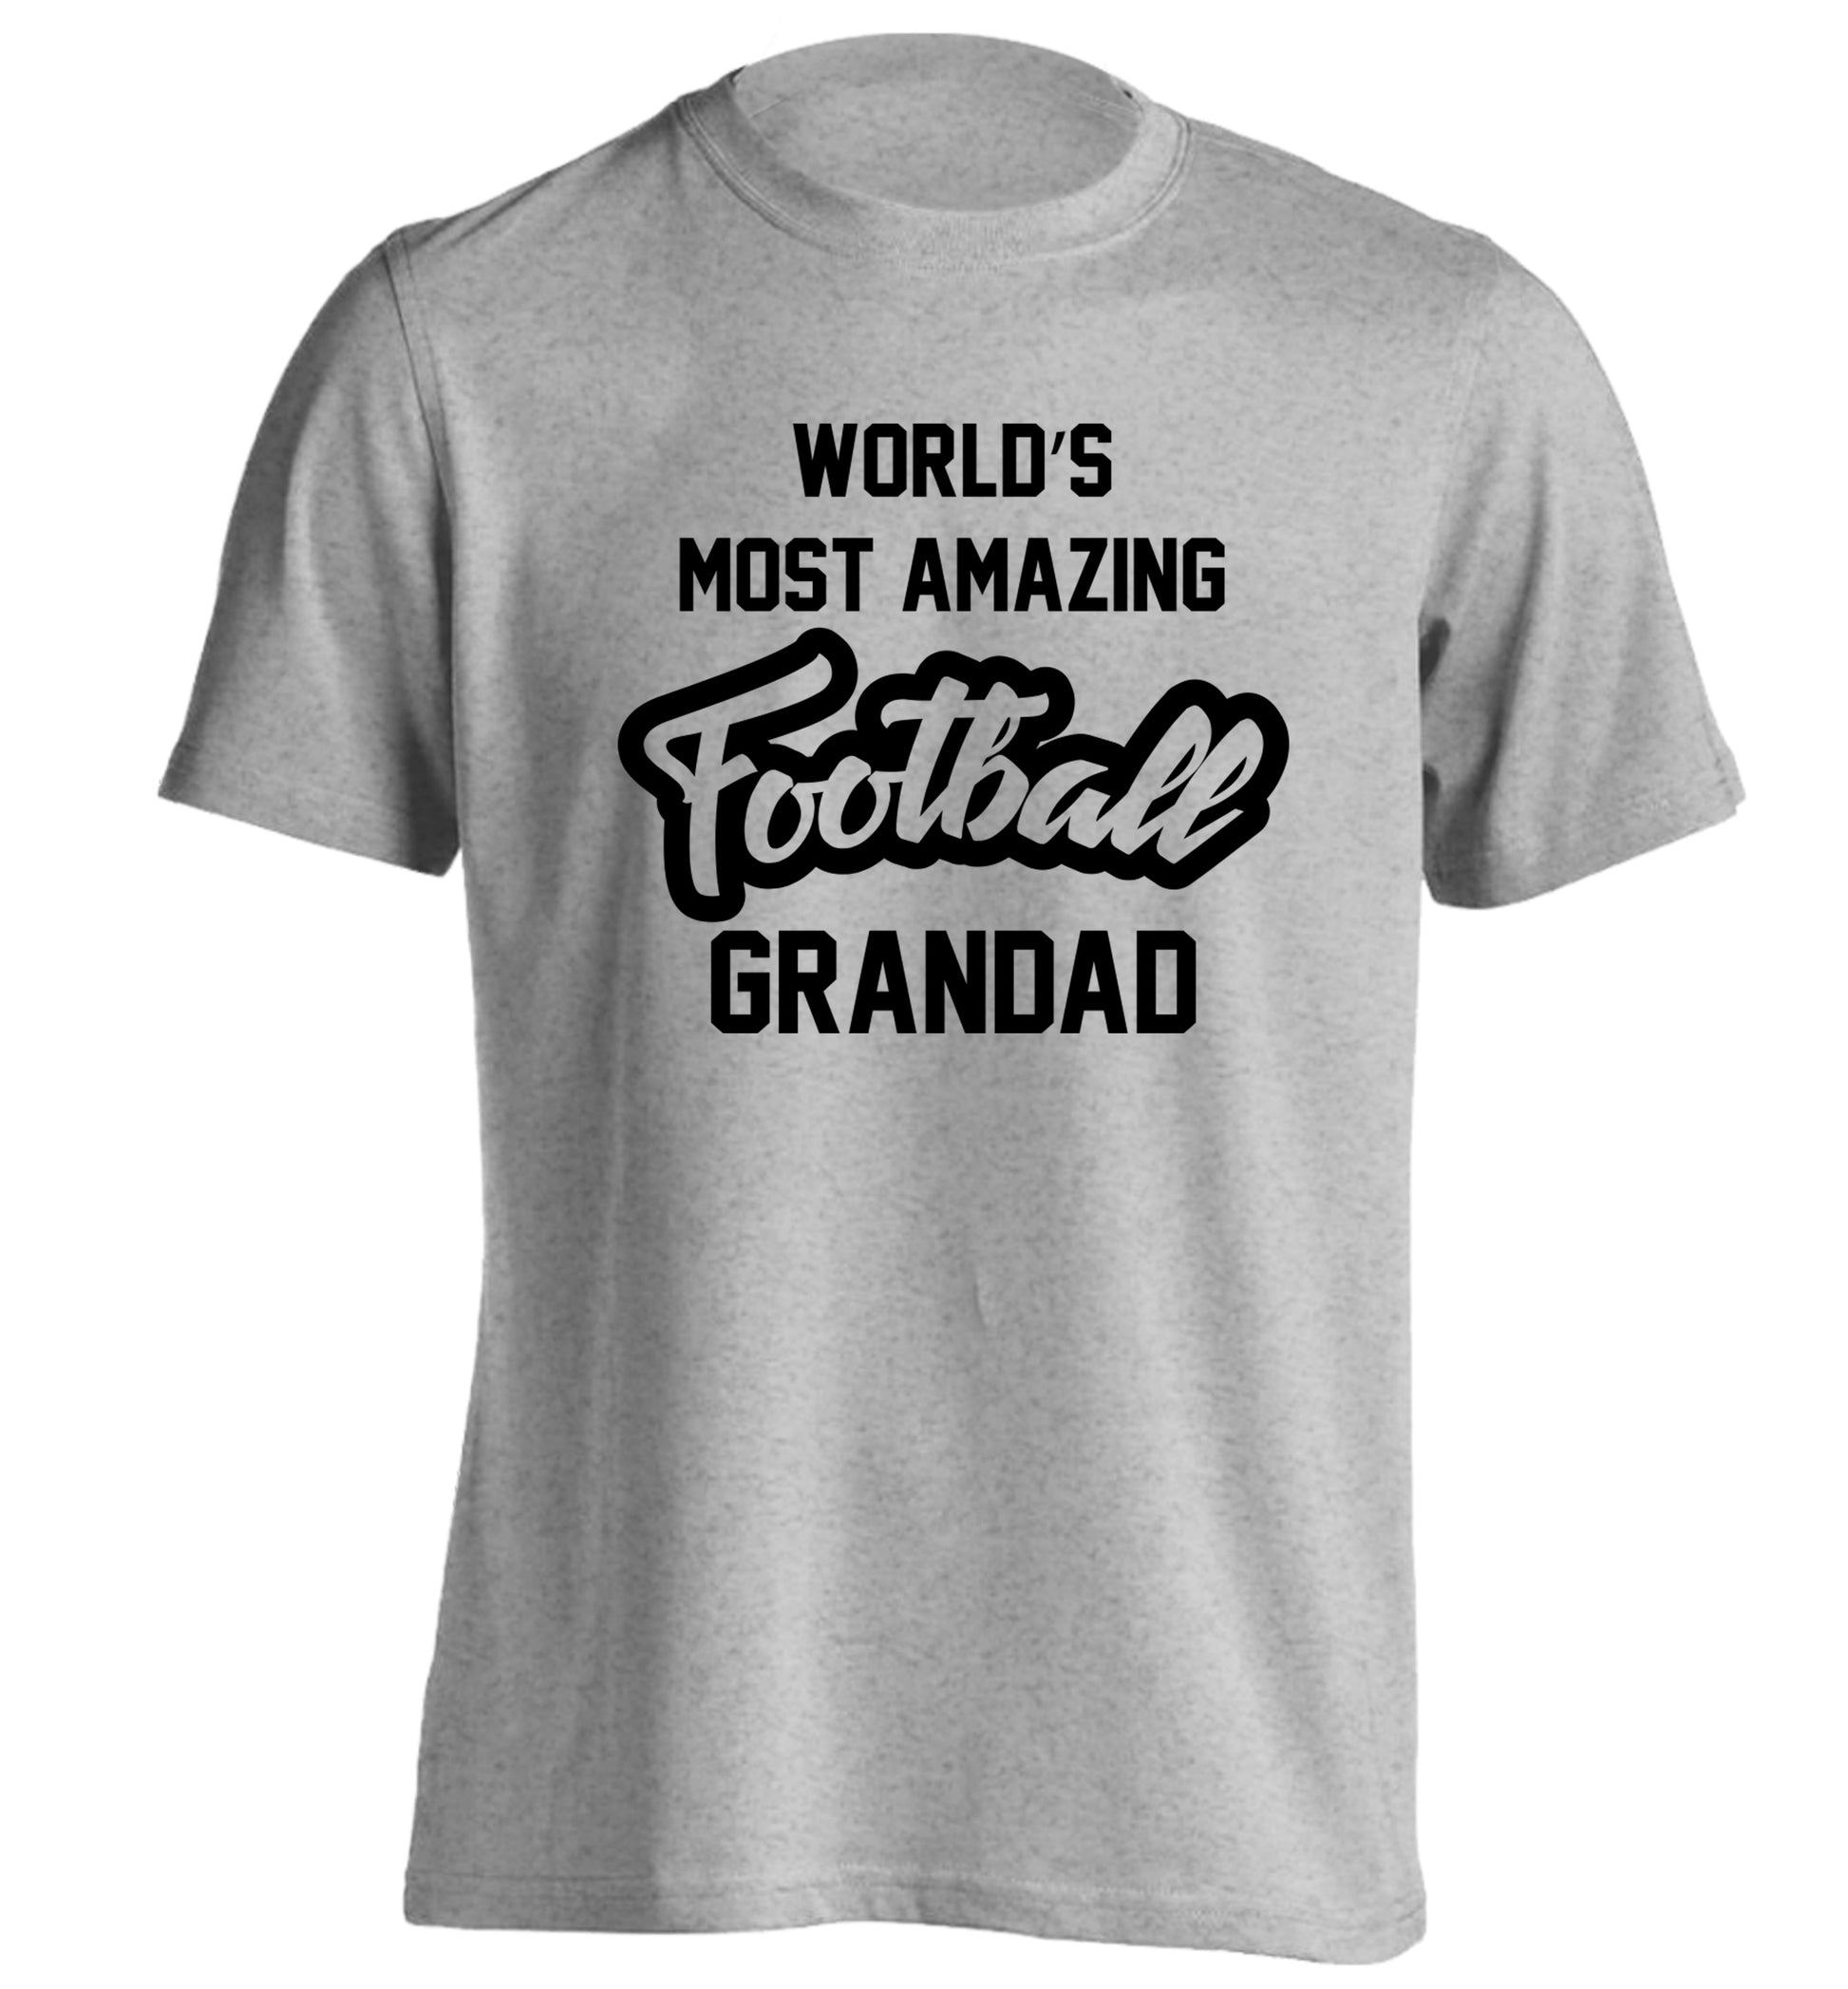 Worlds most amazing football grandad adults unisexgrey Tshirt 2XL